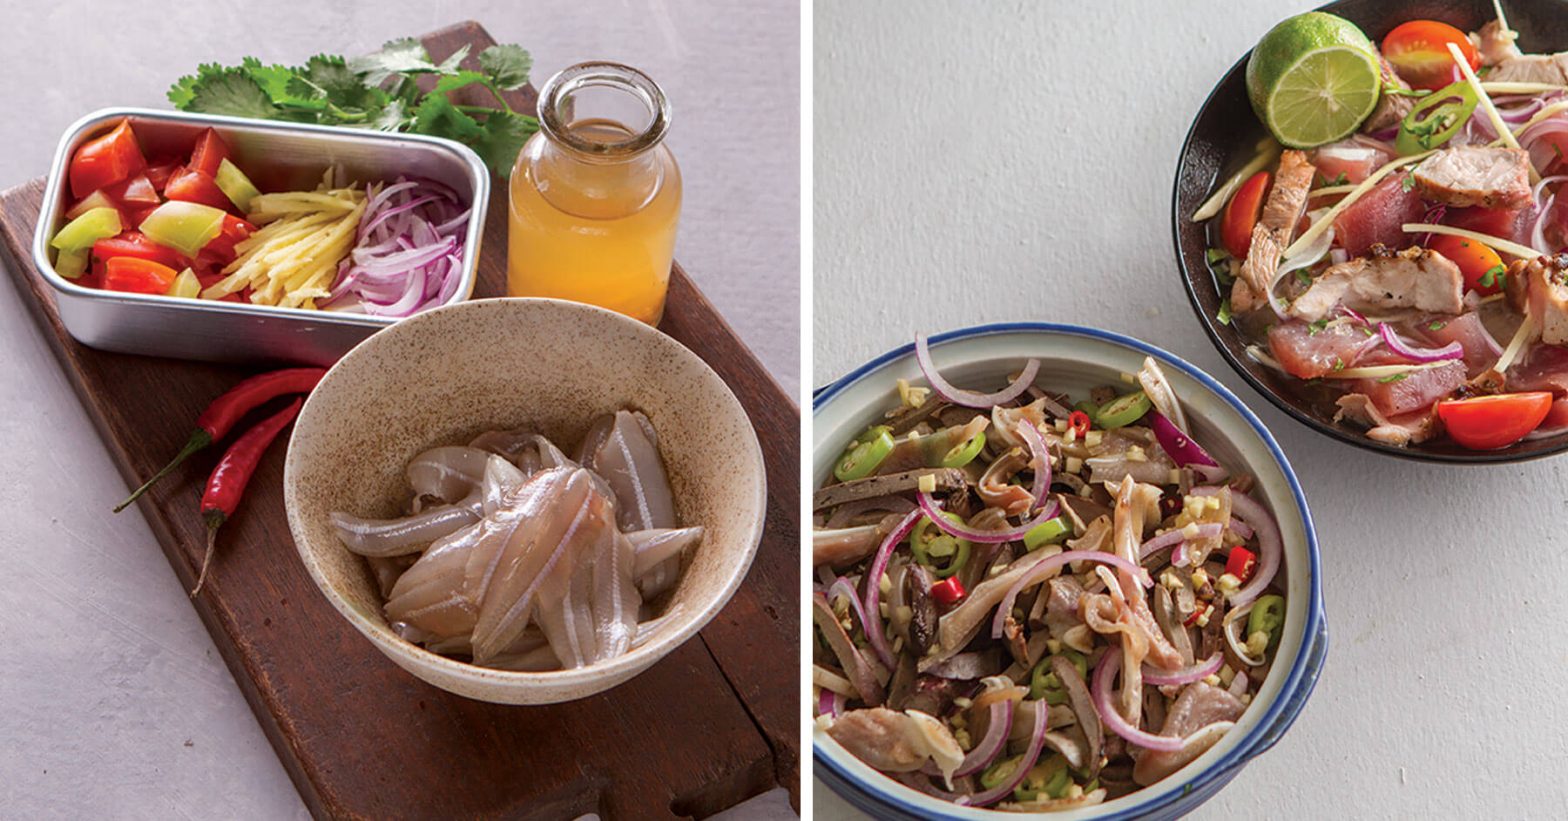 Original Pino brings you Chef Tatung’s ‘From Heart to Platter’ menu